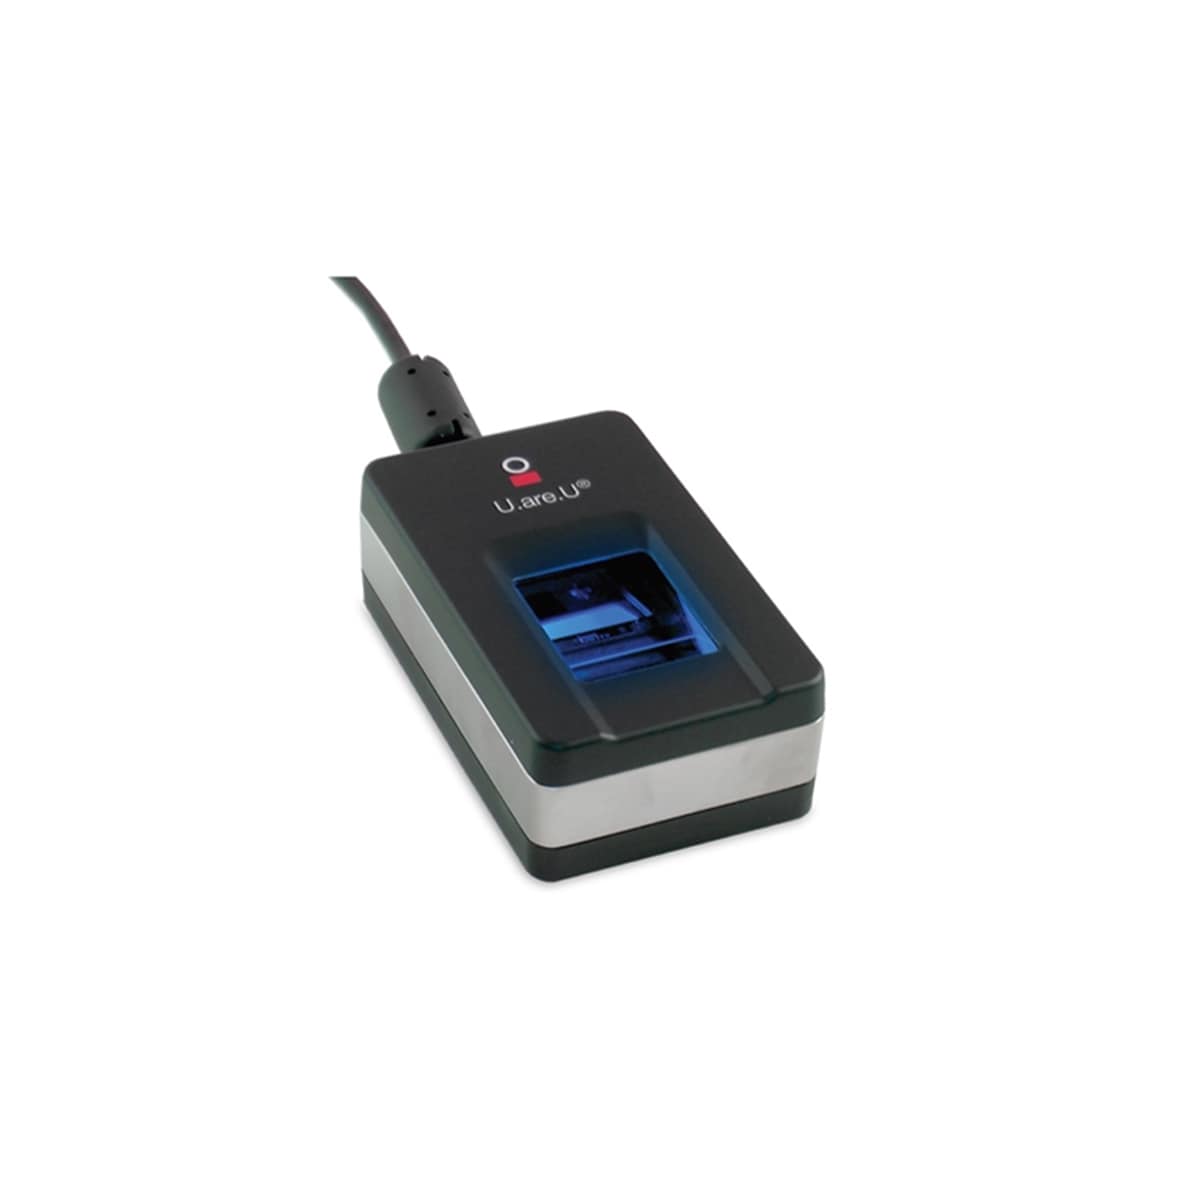 Crossmatch U.are.U 5300 FIPS Fingerprint 30 FAP 201/PIV, Certified Fulcrum Inc Biometrics, – USB